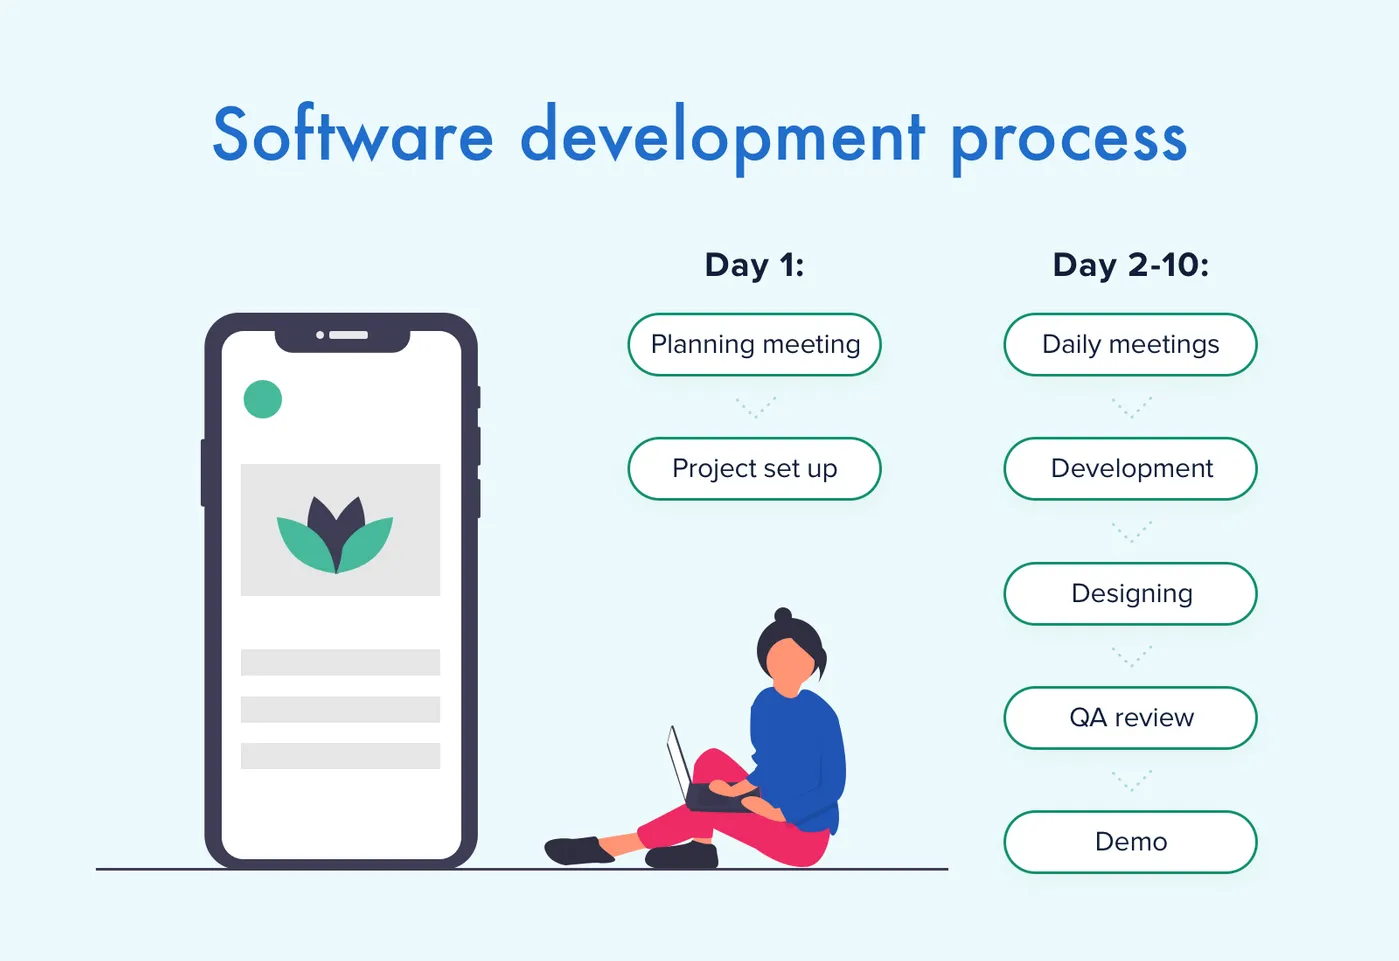 How software development process goes